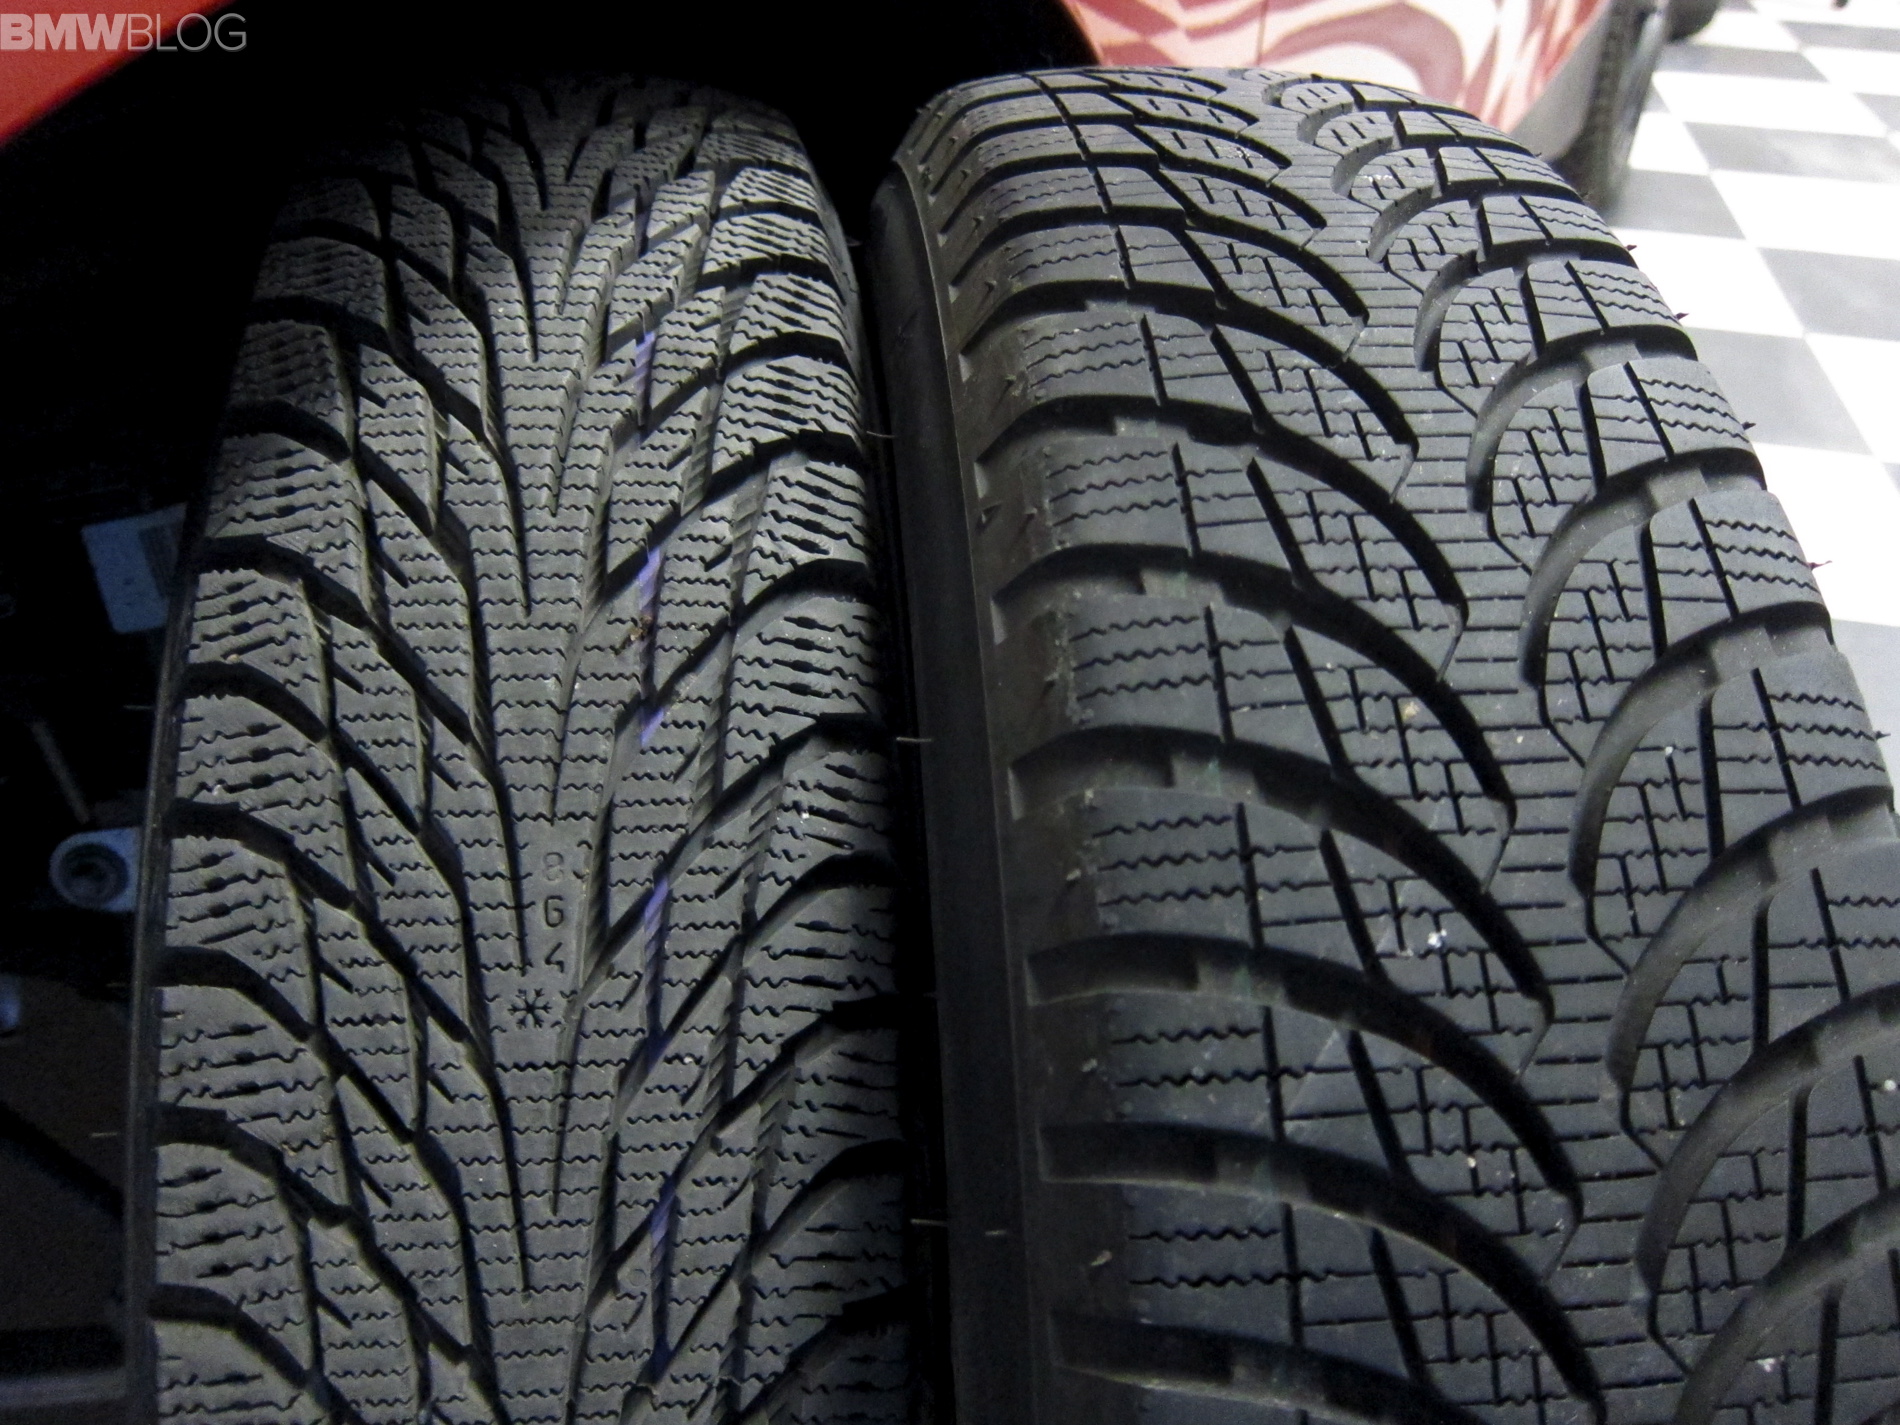 Bridgestone Blizzak R2 Hakkapeliitta vs. Winter i3 LM-500 Review: BMW Nokian Tires